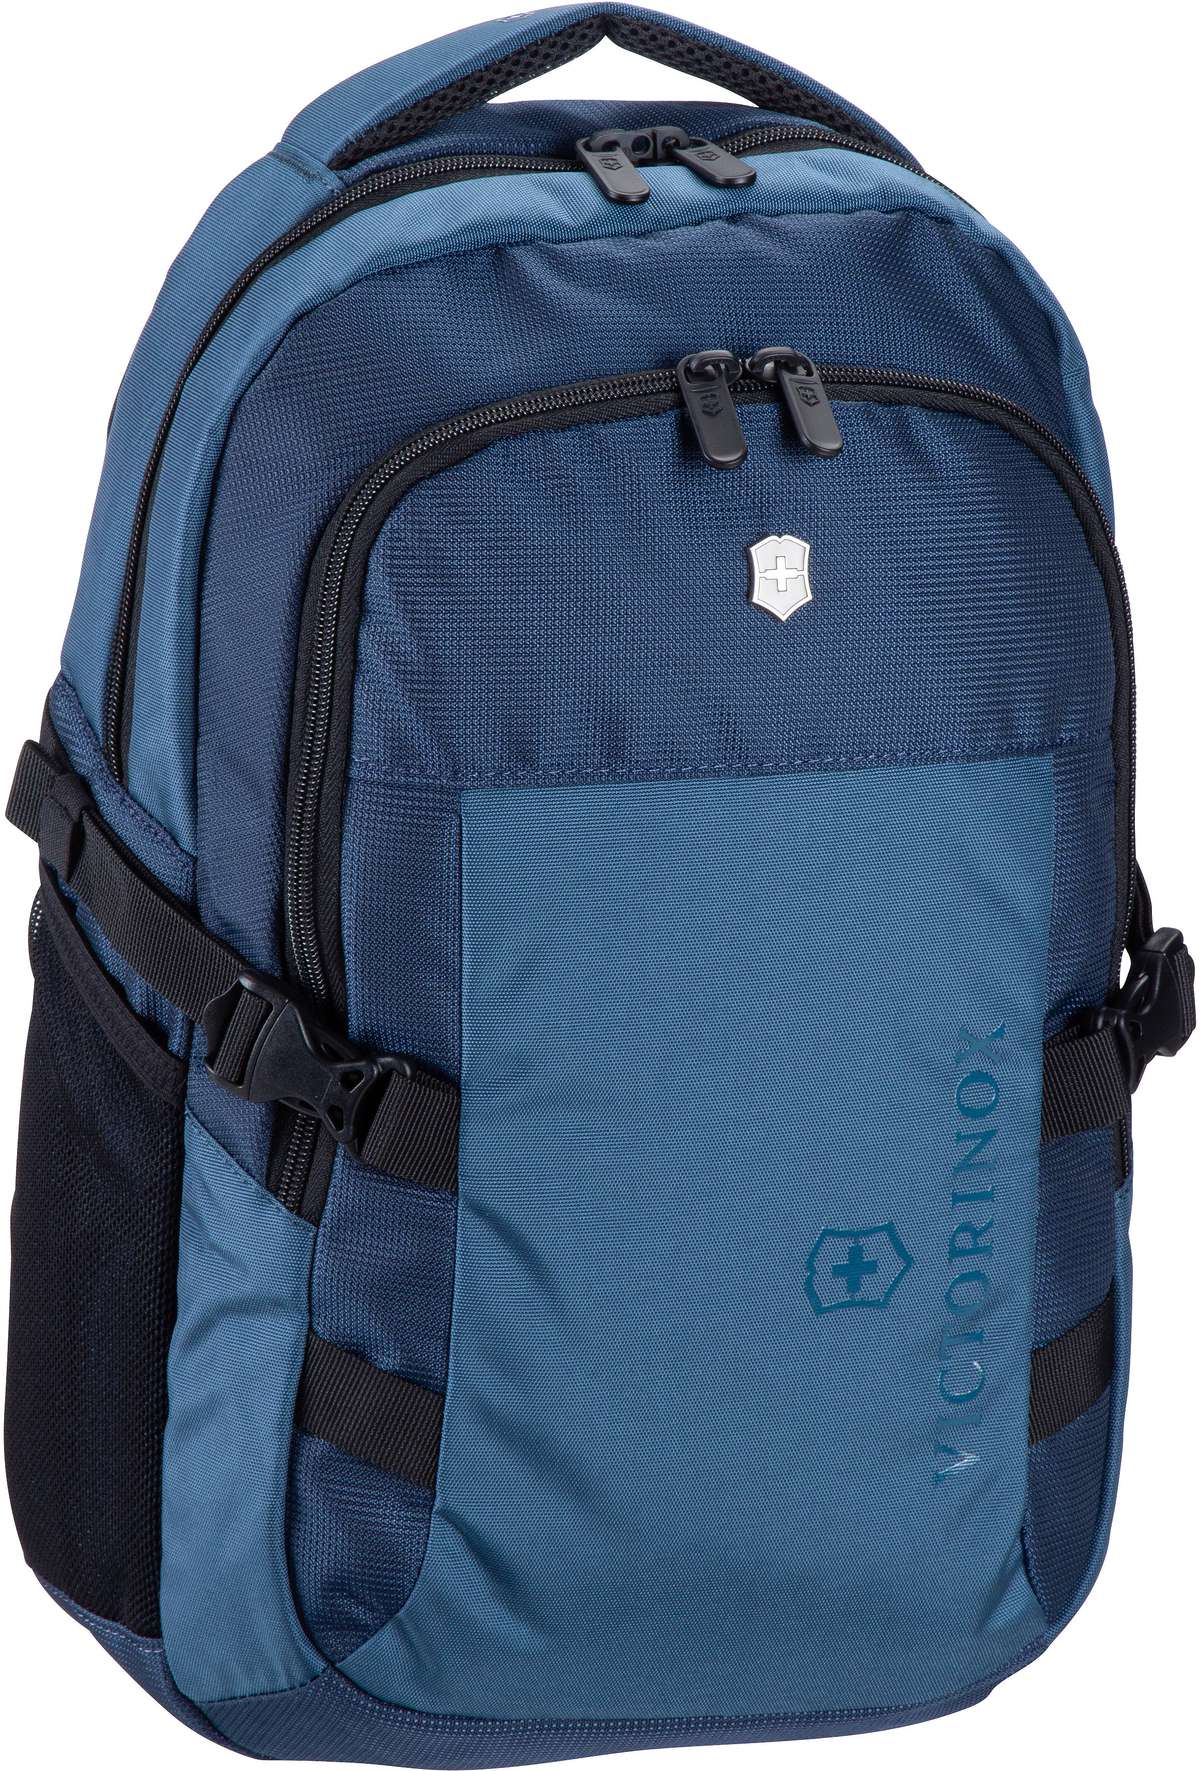 Victorinox Vx Sport EVO Compact Backpack - Deep Lake/Blue